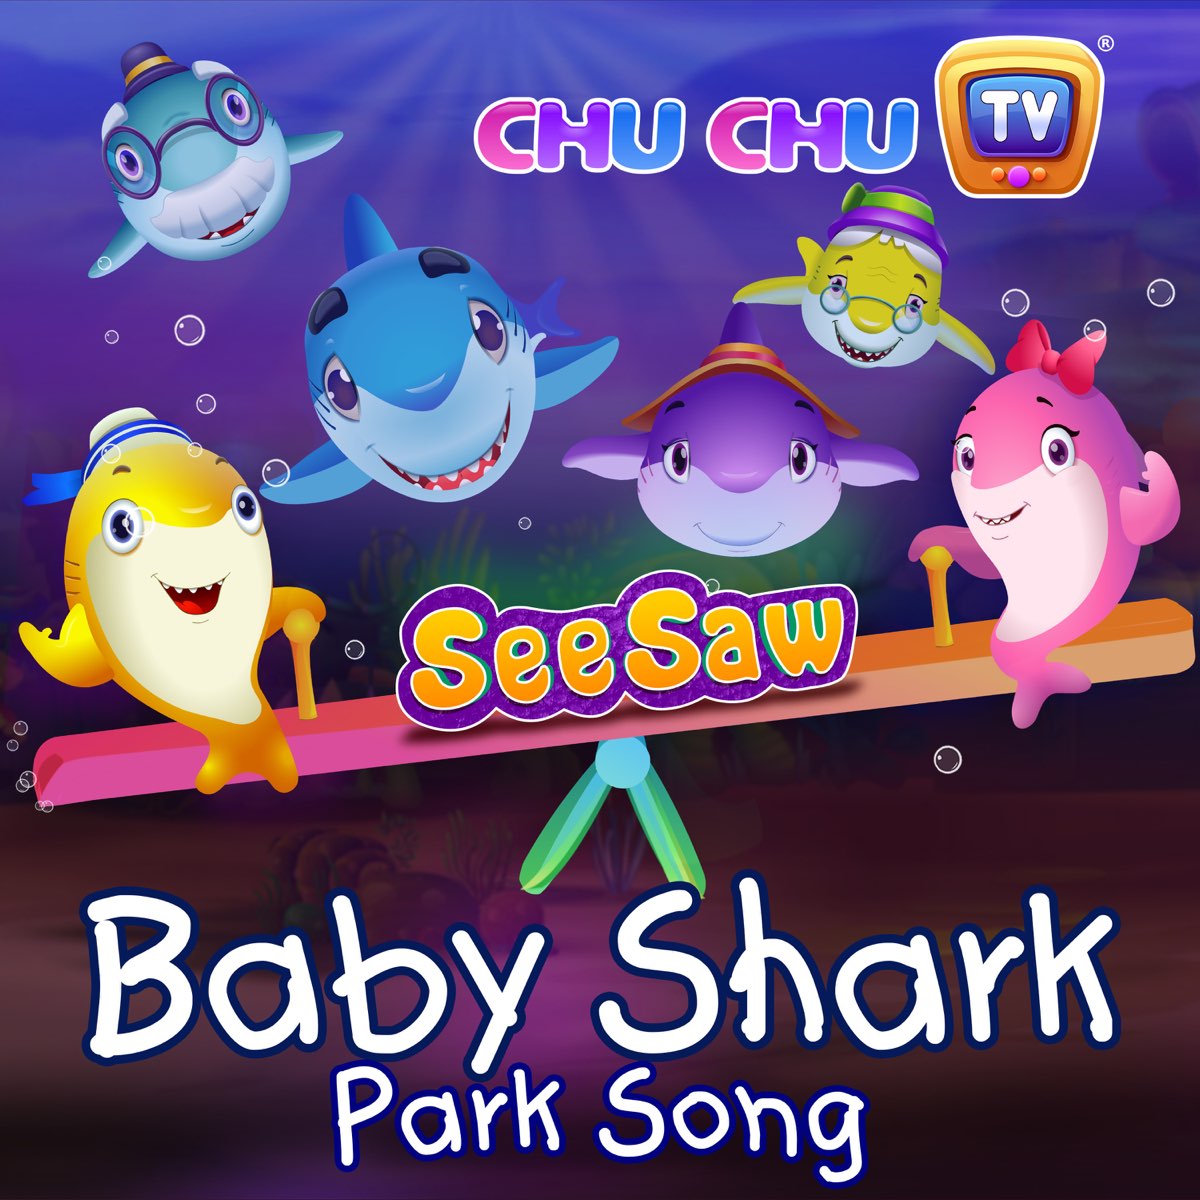 Baby shark small dick song